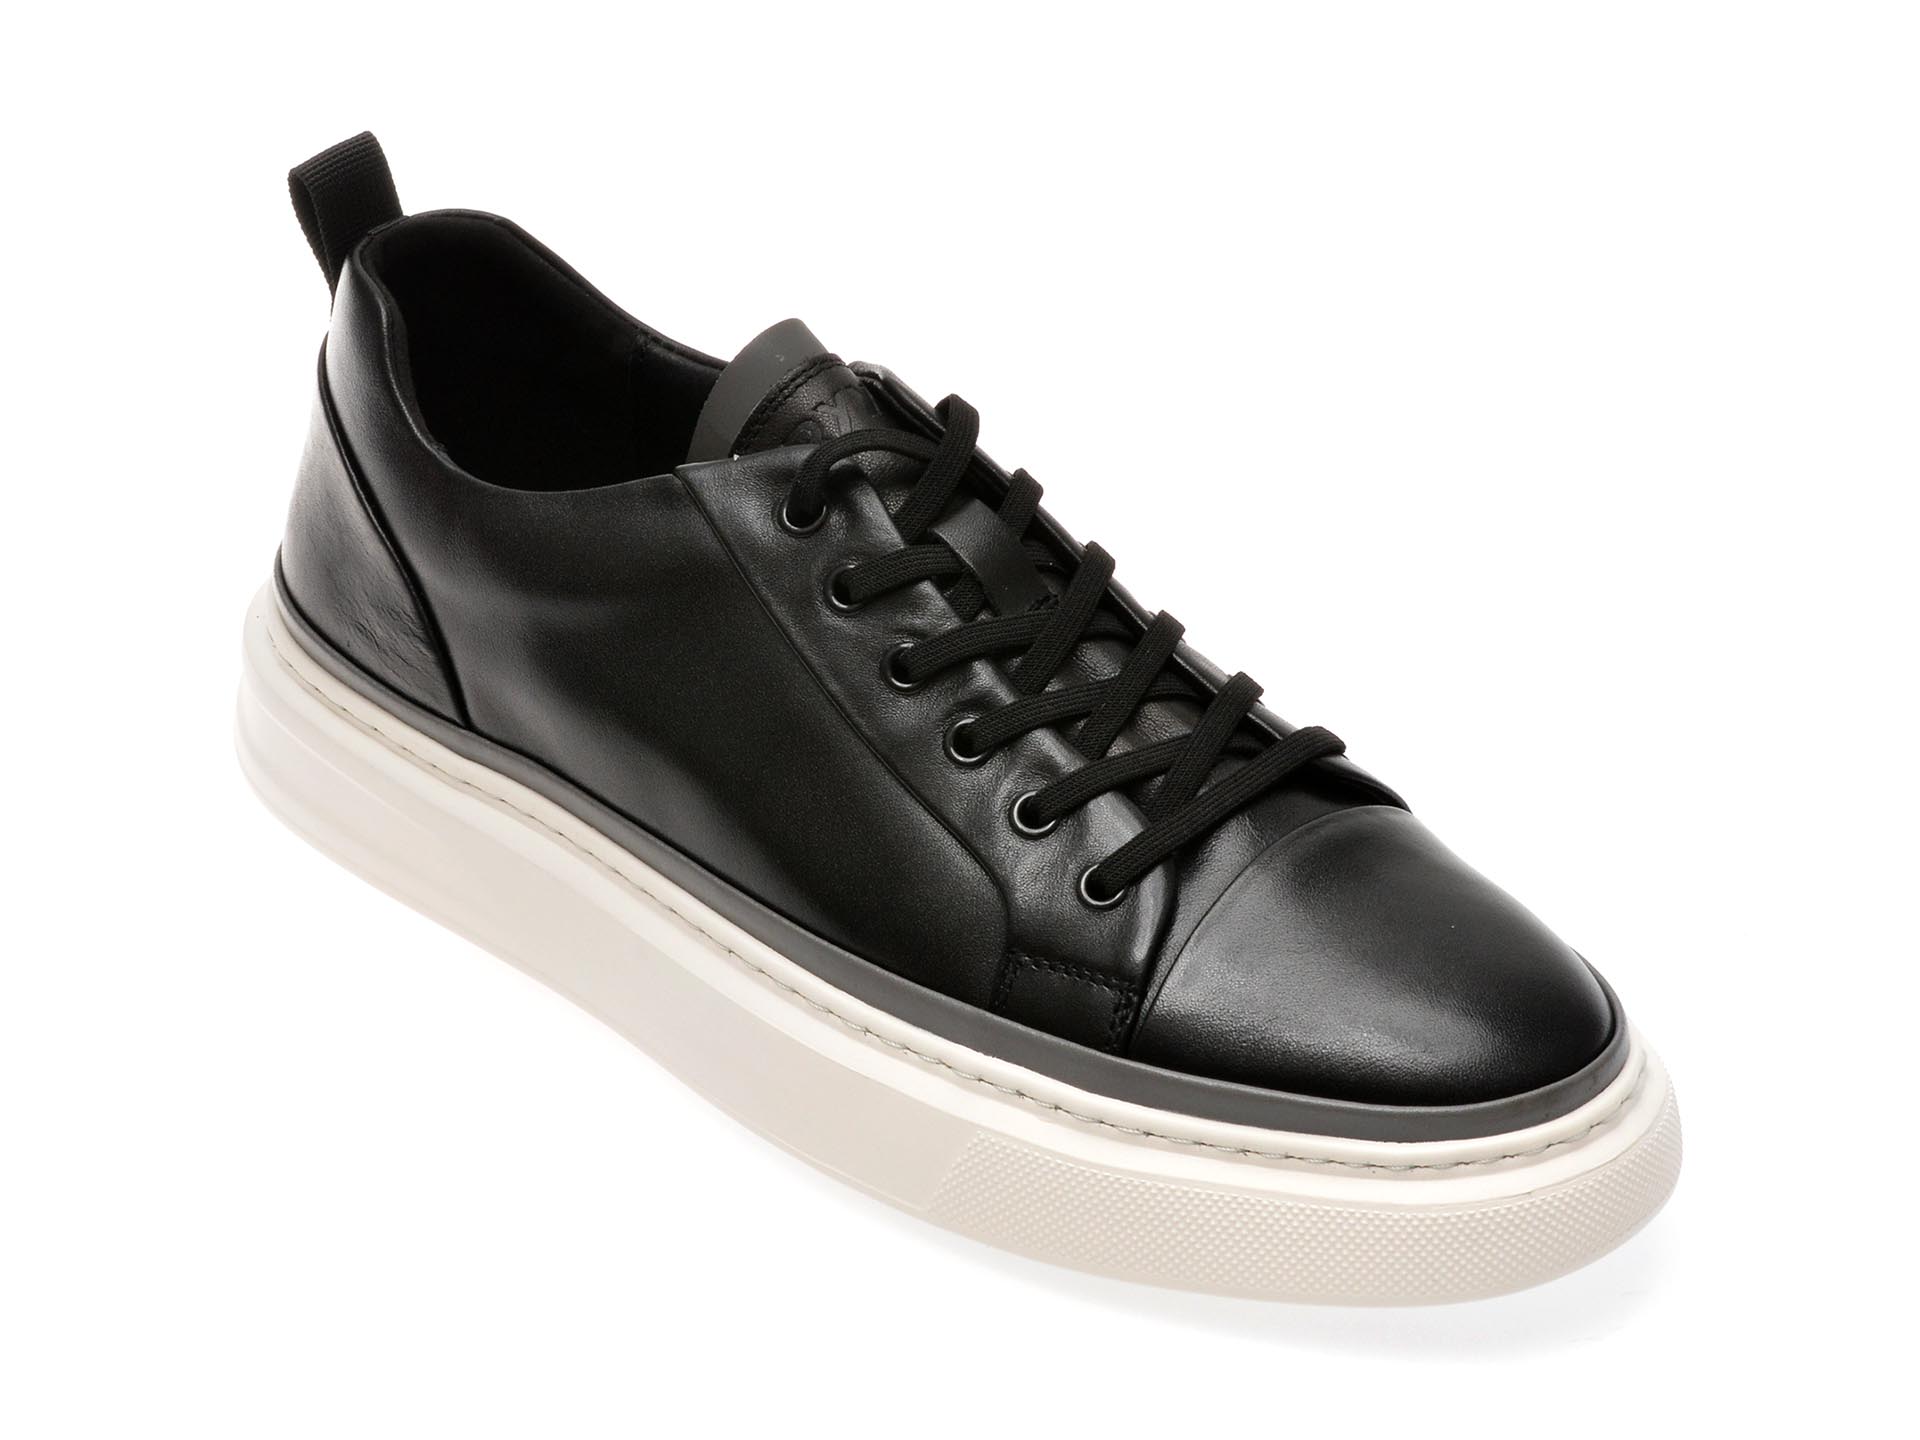 Pantofi casual GRYXX negri, 319, din piele naturala